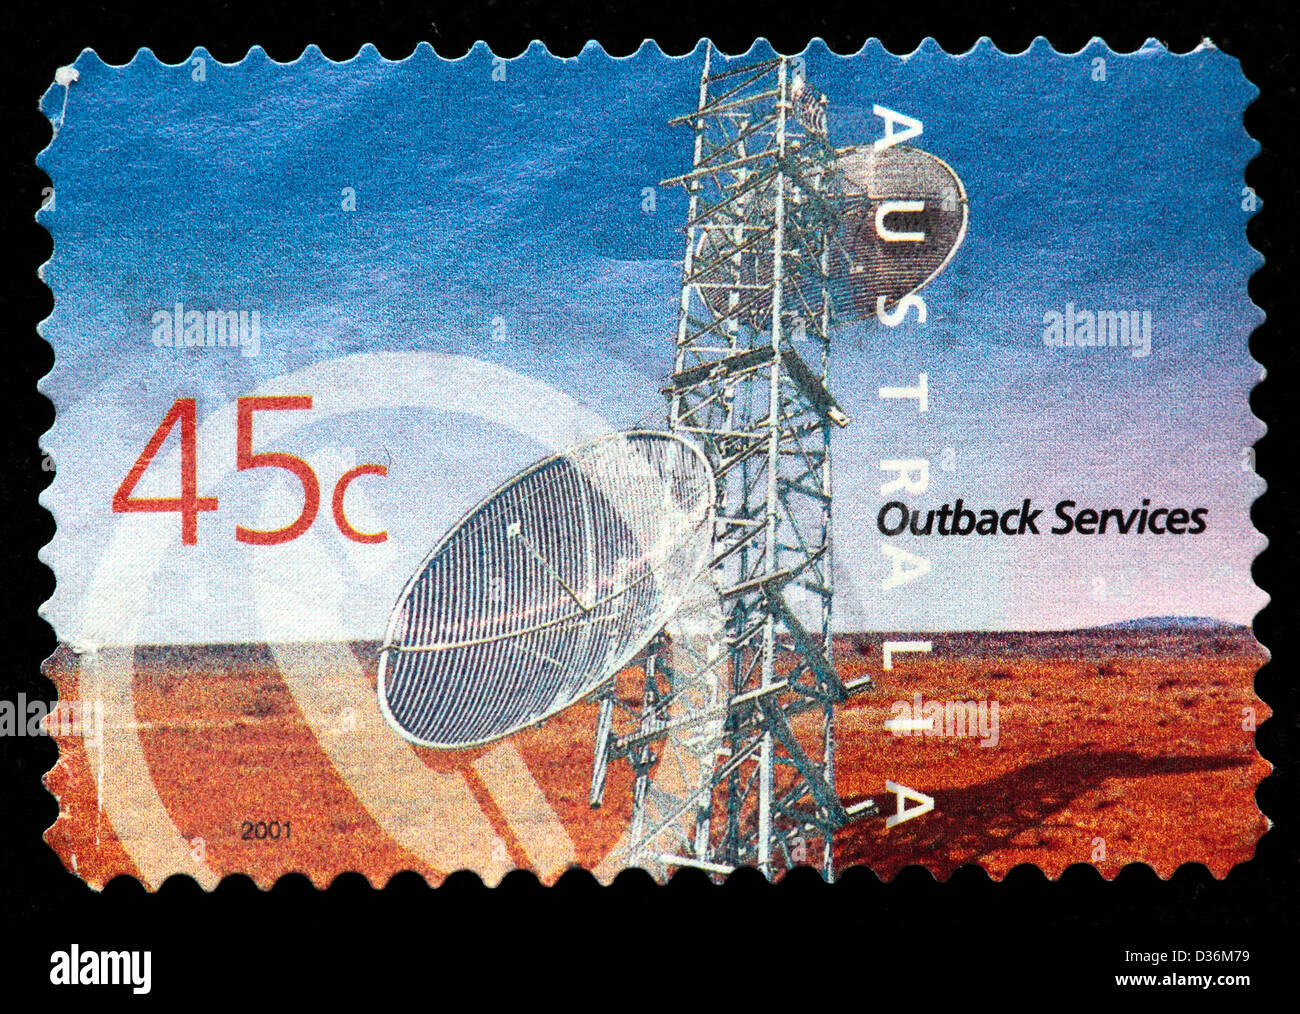 Outback services, postage stamp, Australia, 2001 Stock Photo